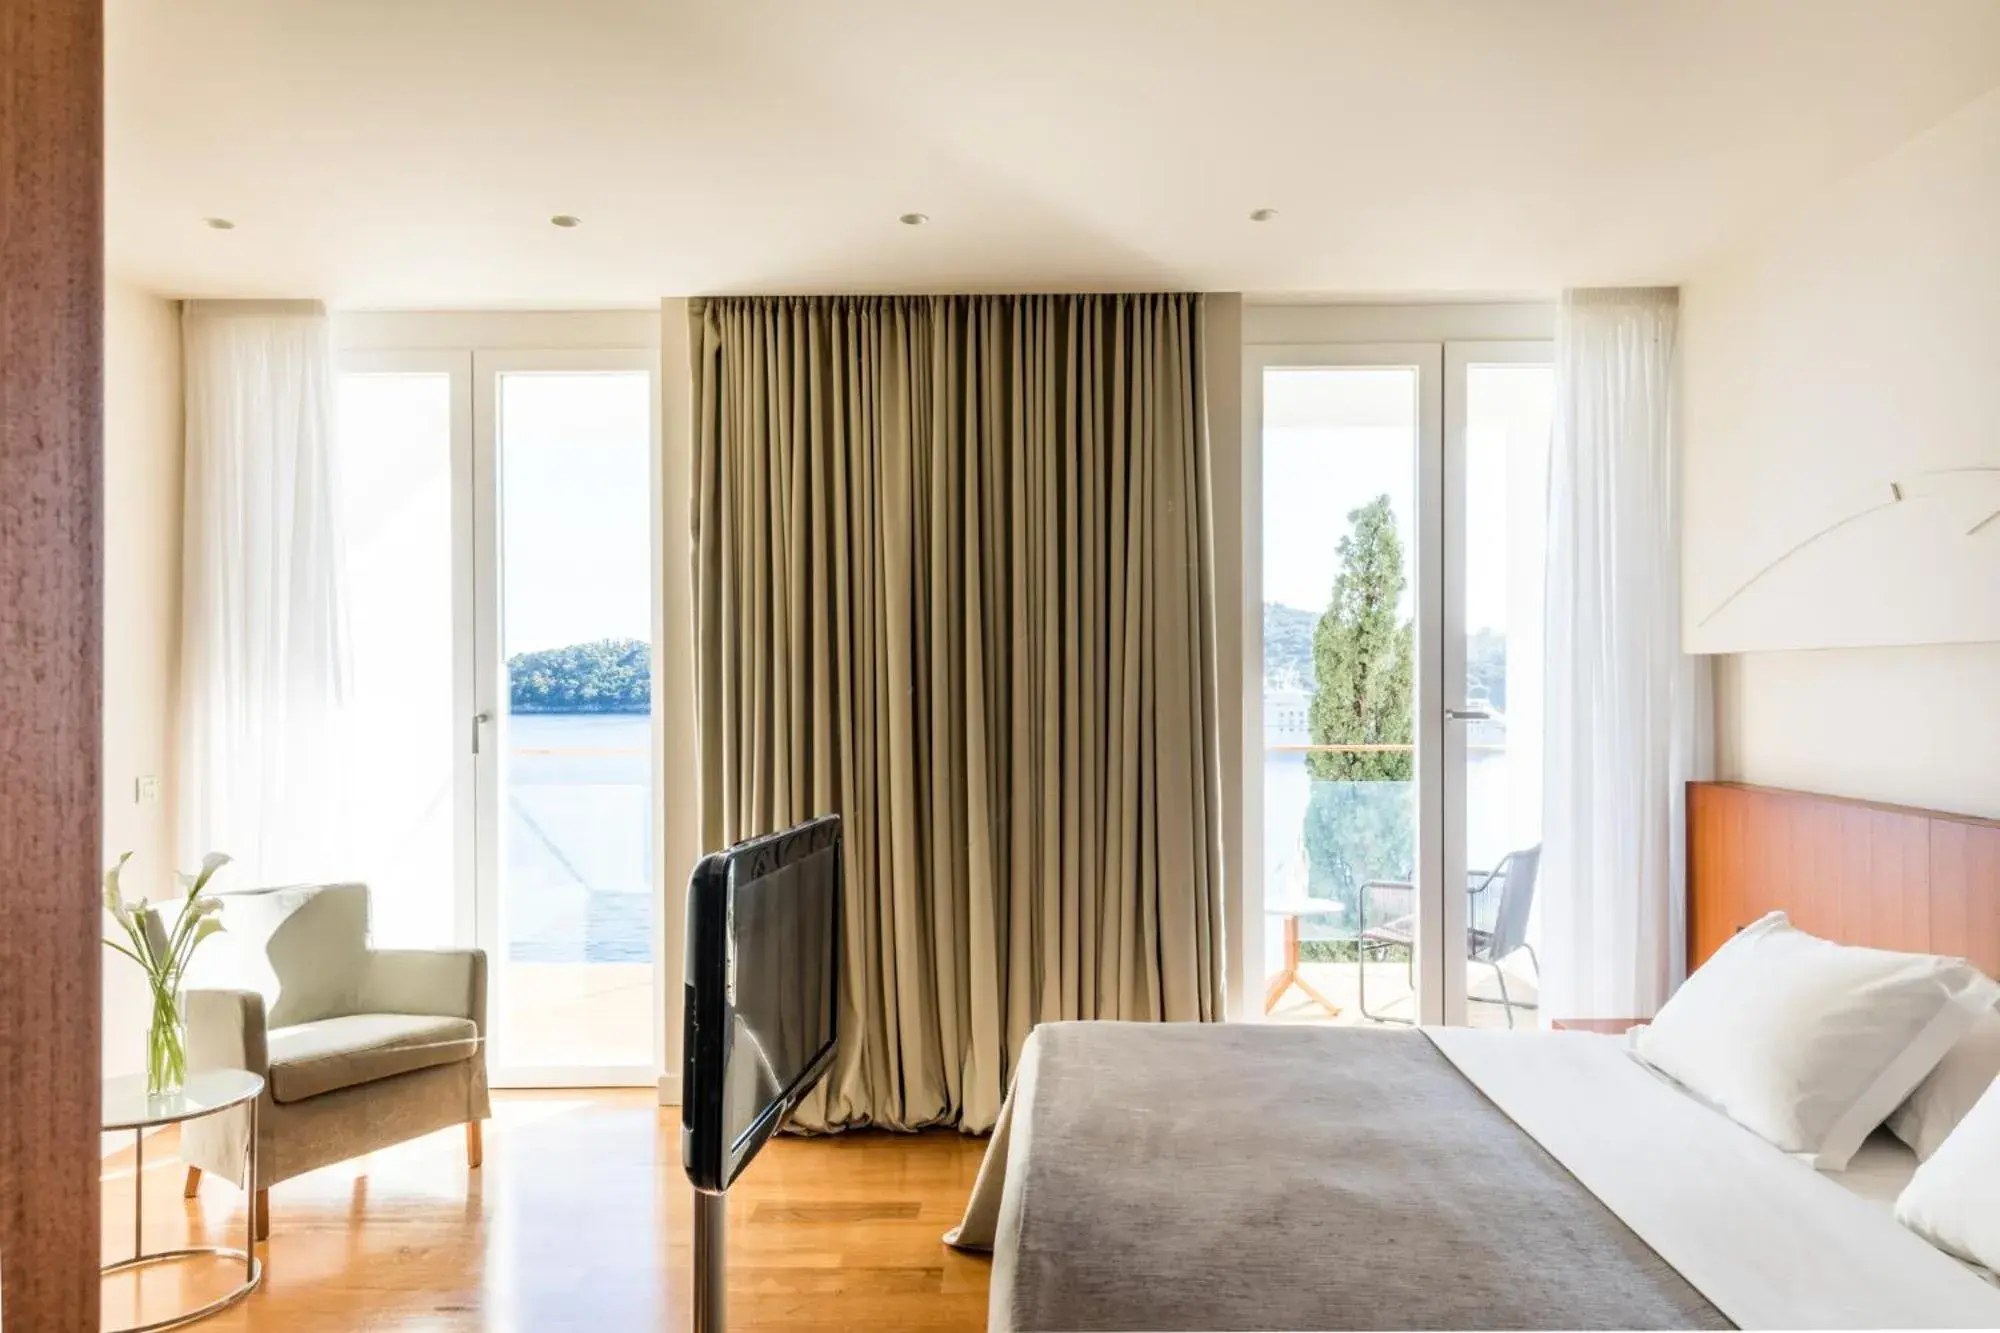 Bedroom in Villa Dubrovnik